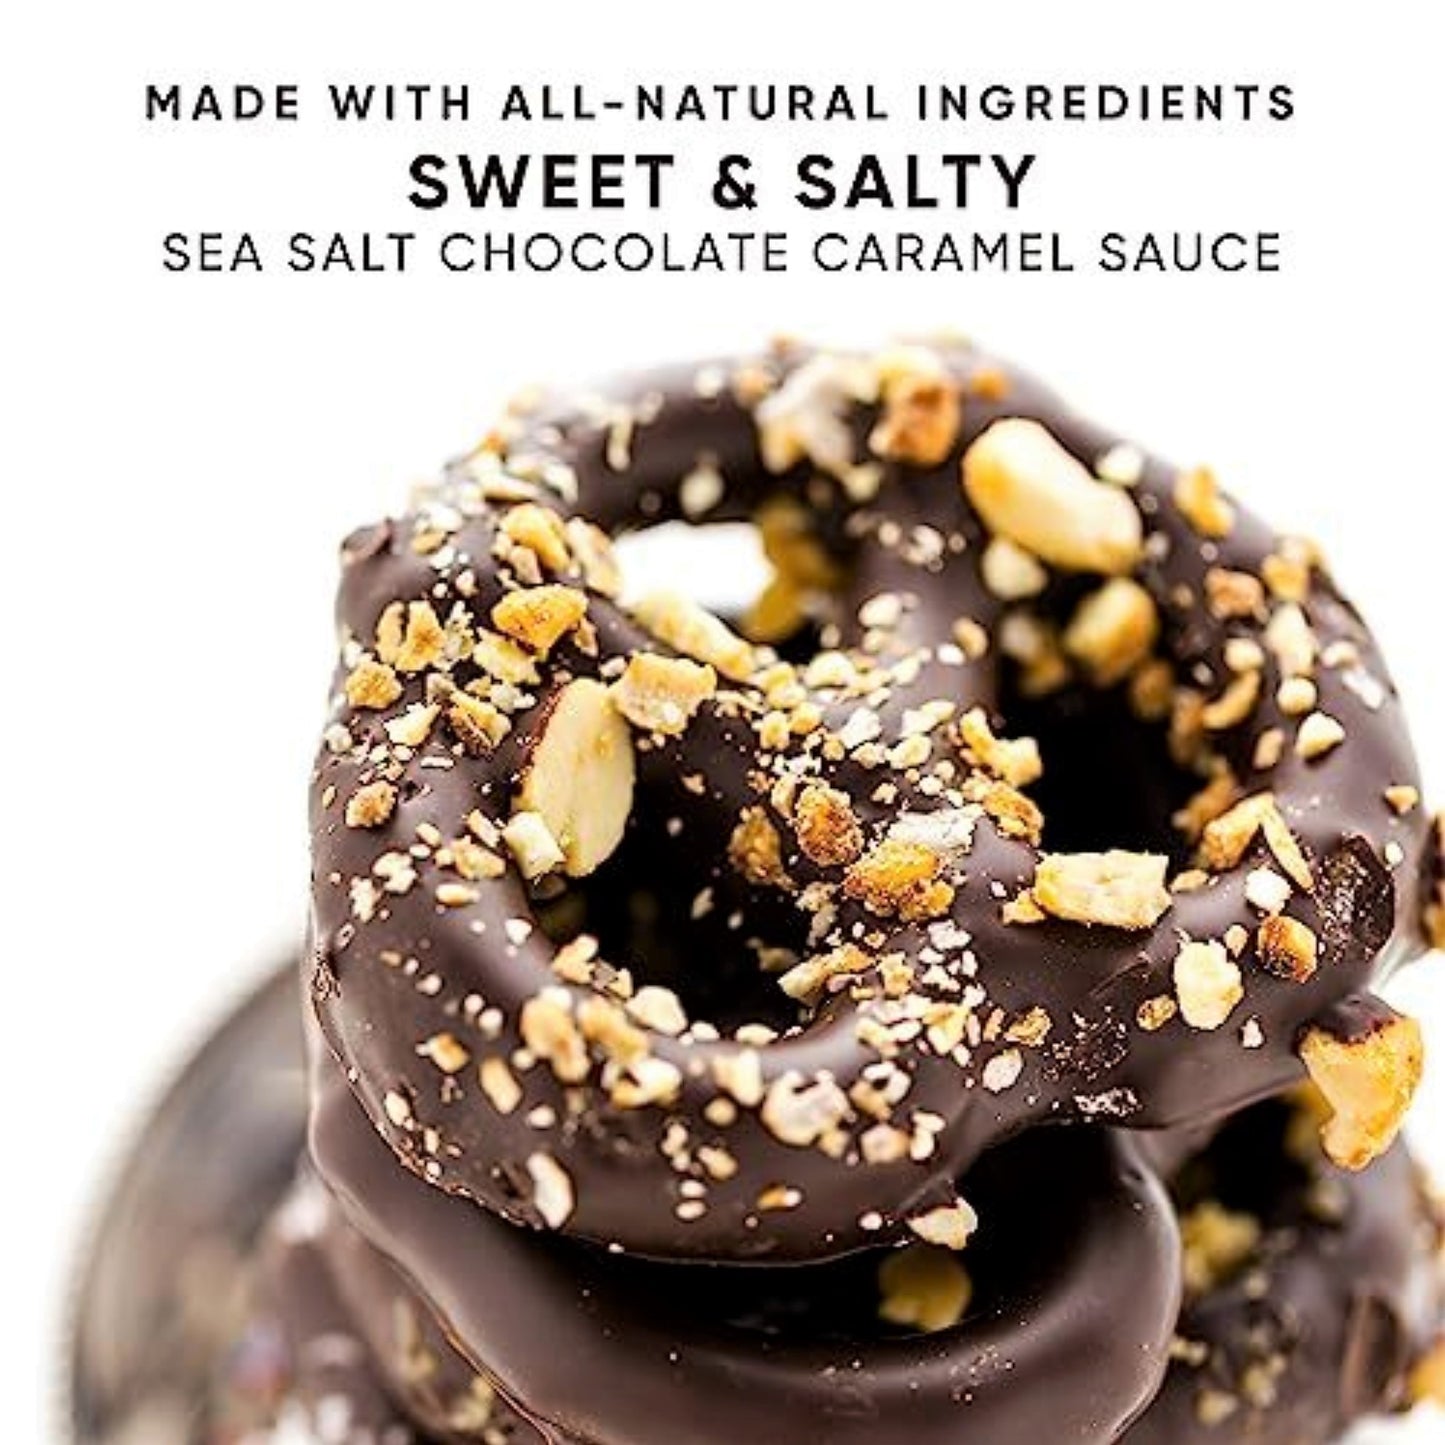 Sea Salt Chocolate Caramel